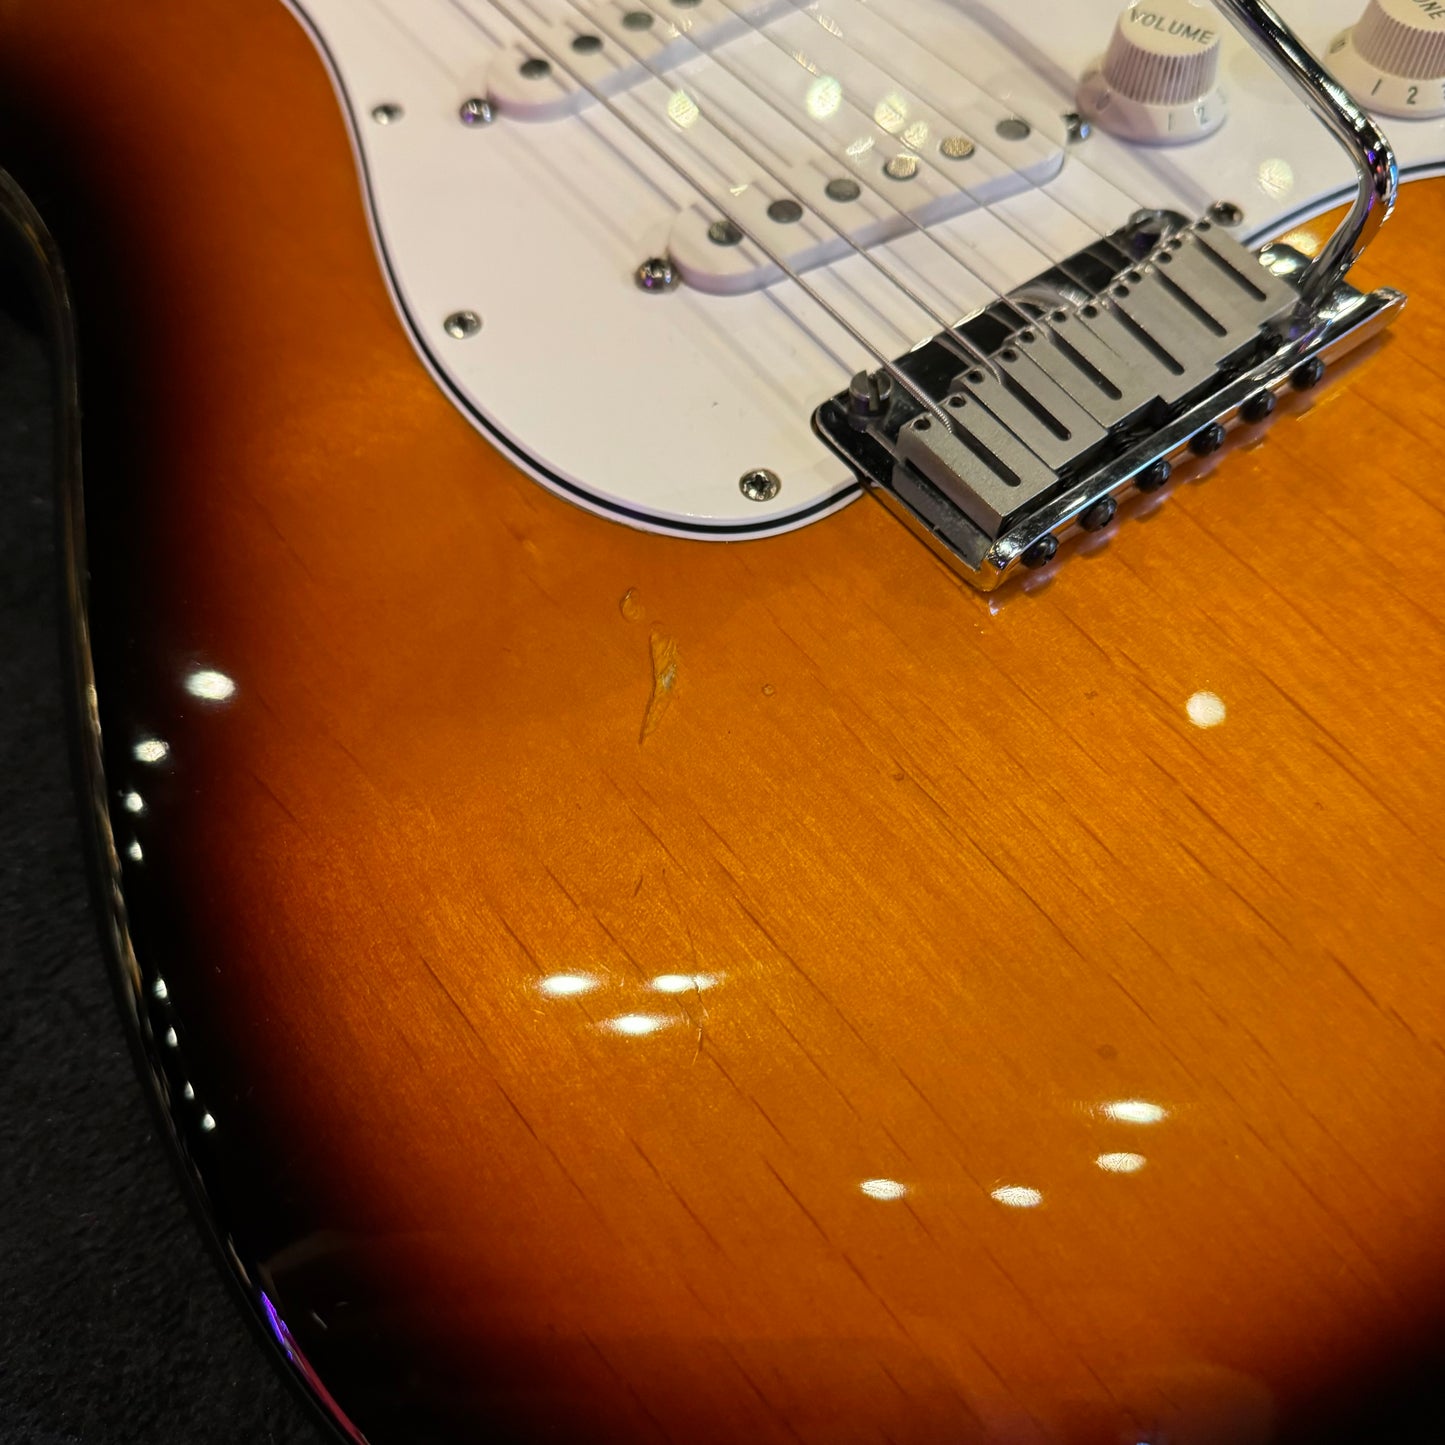 Fender Stratocaster USA Standard 1997